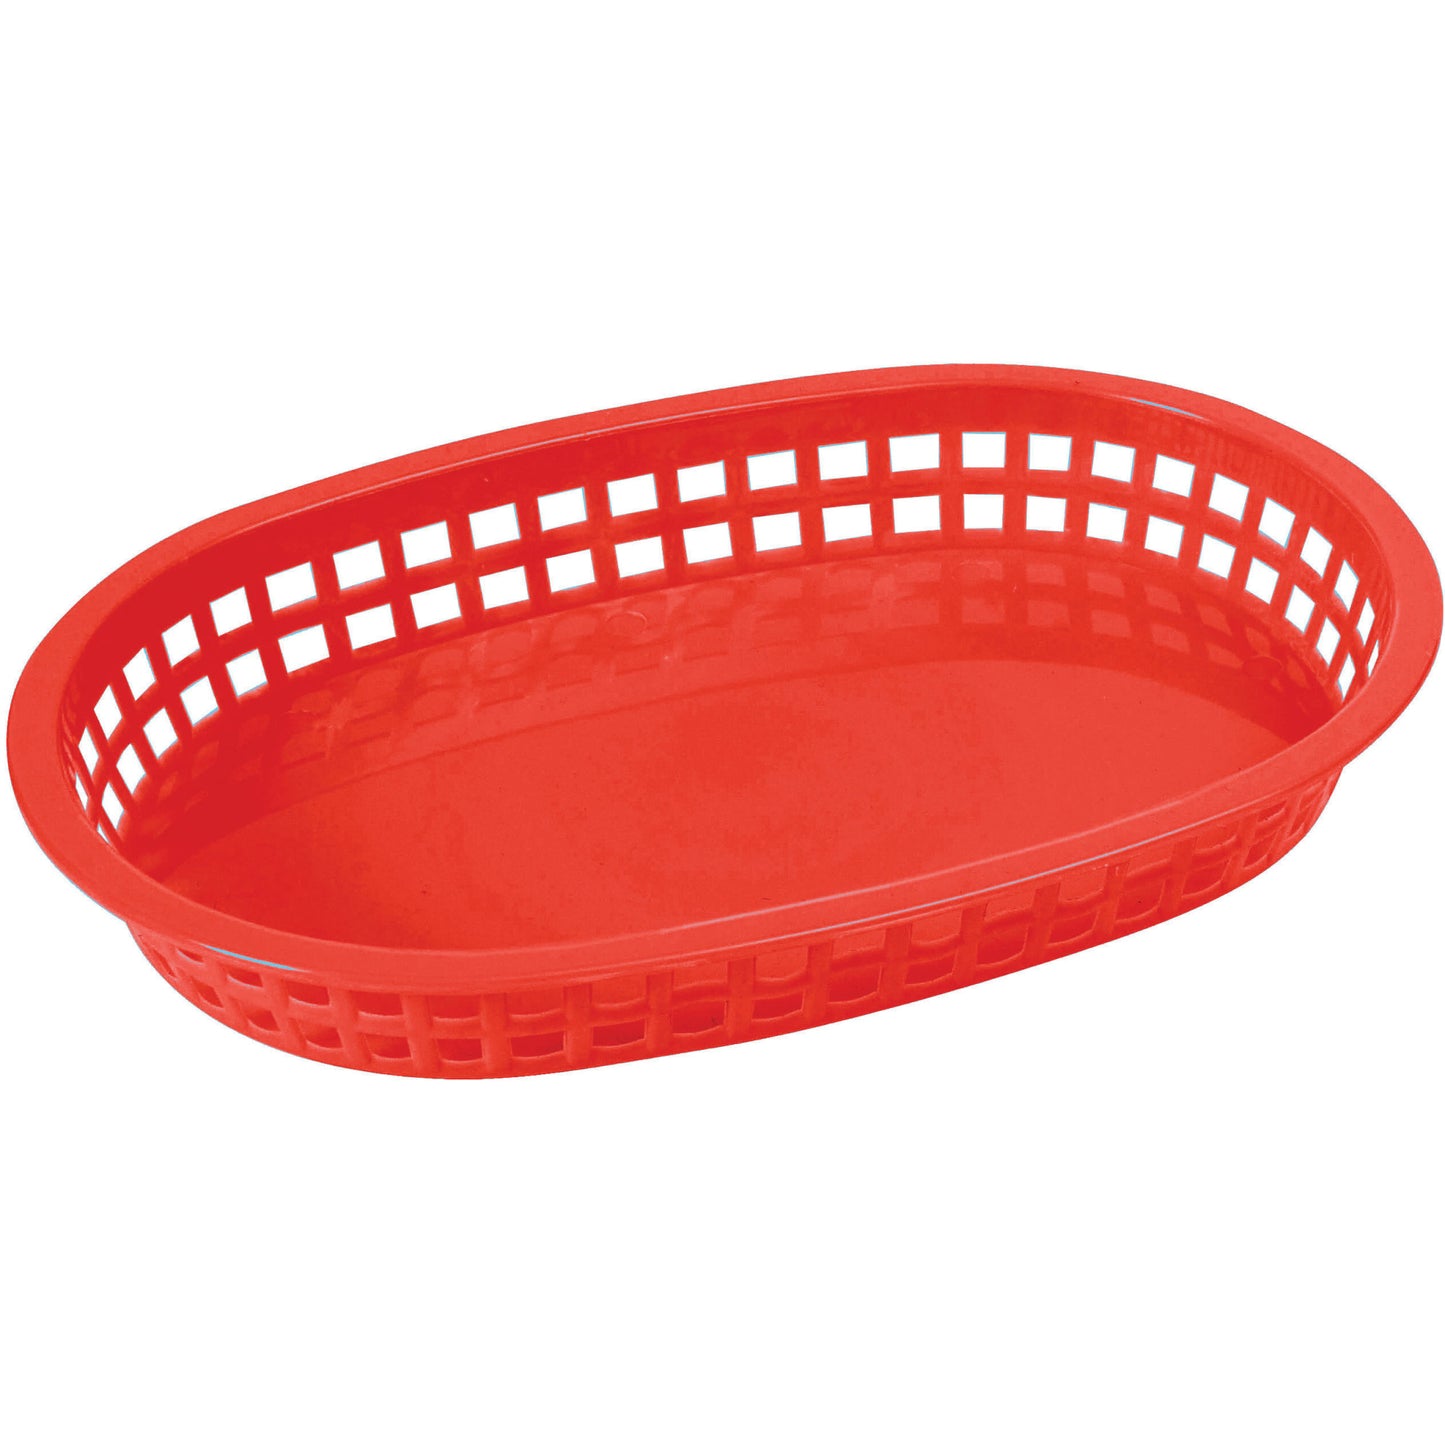 PLB-R - Oval Platter Baskets, 10-3/4" x 7-1/4" x 1-1/2" - Red